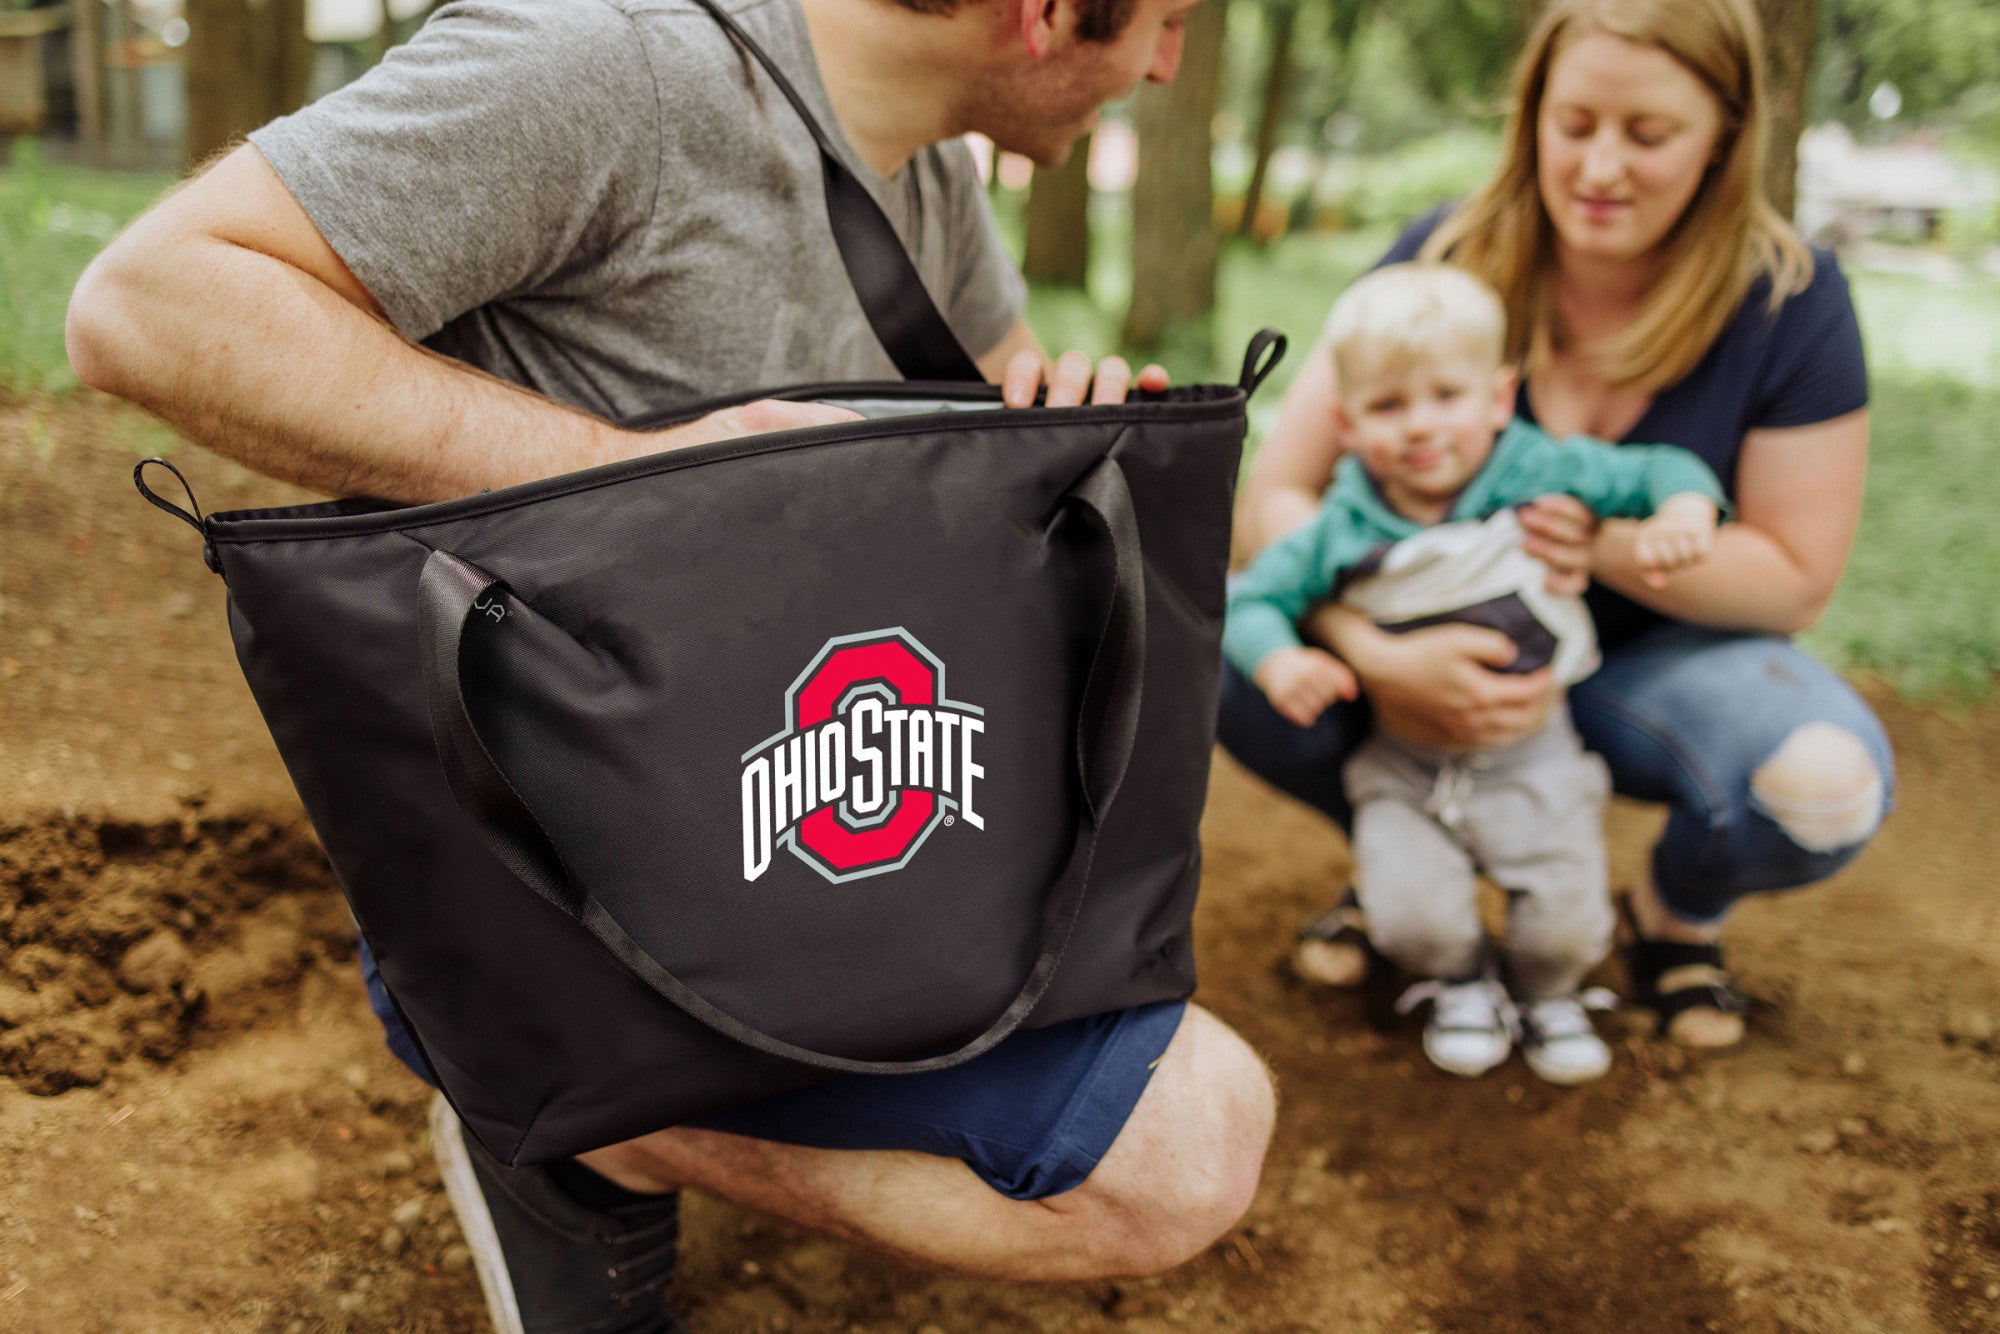 Ohio State Buckeyes - Tarana Cooler Tote Bag